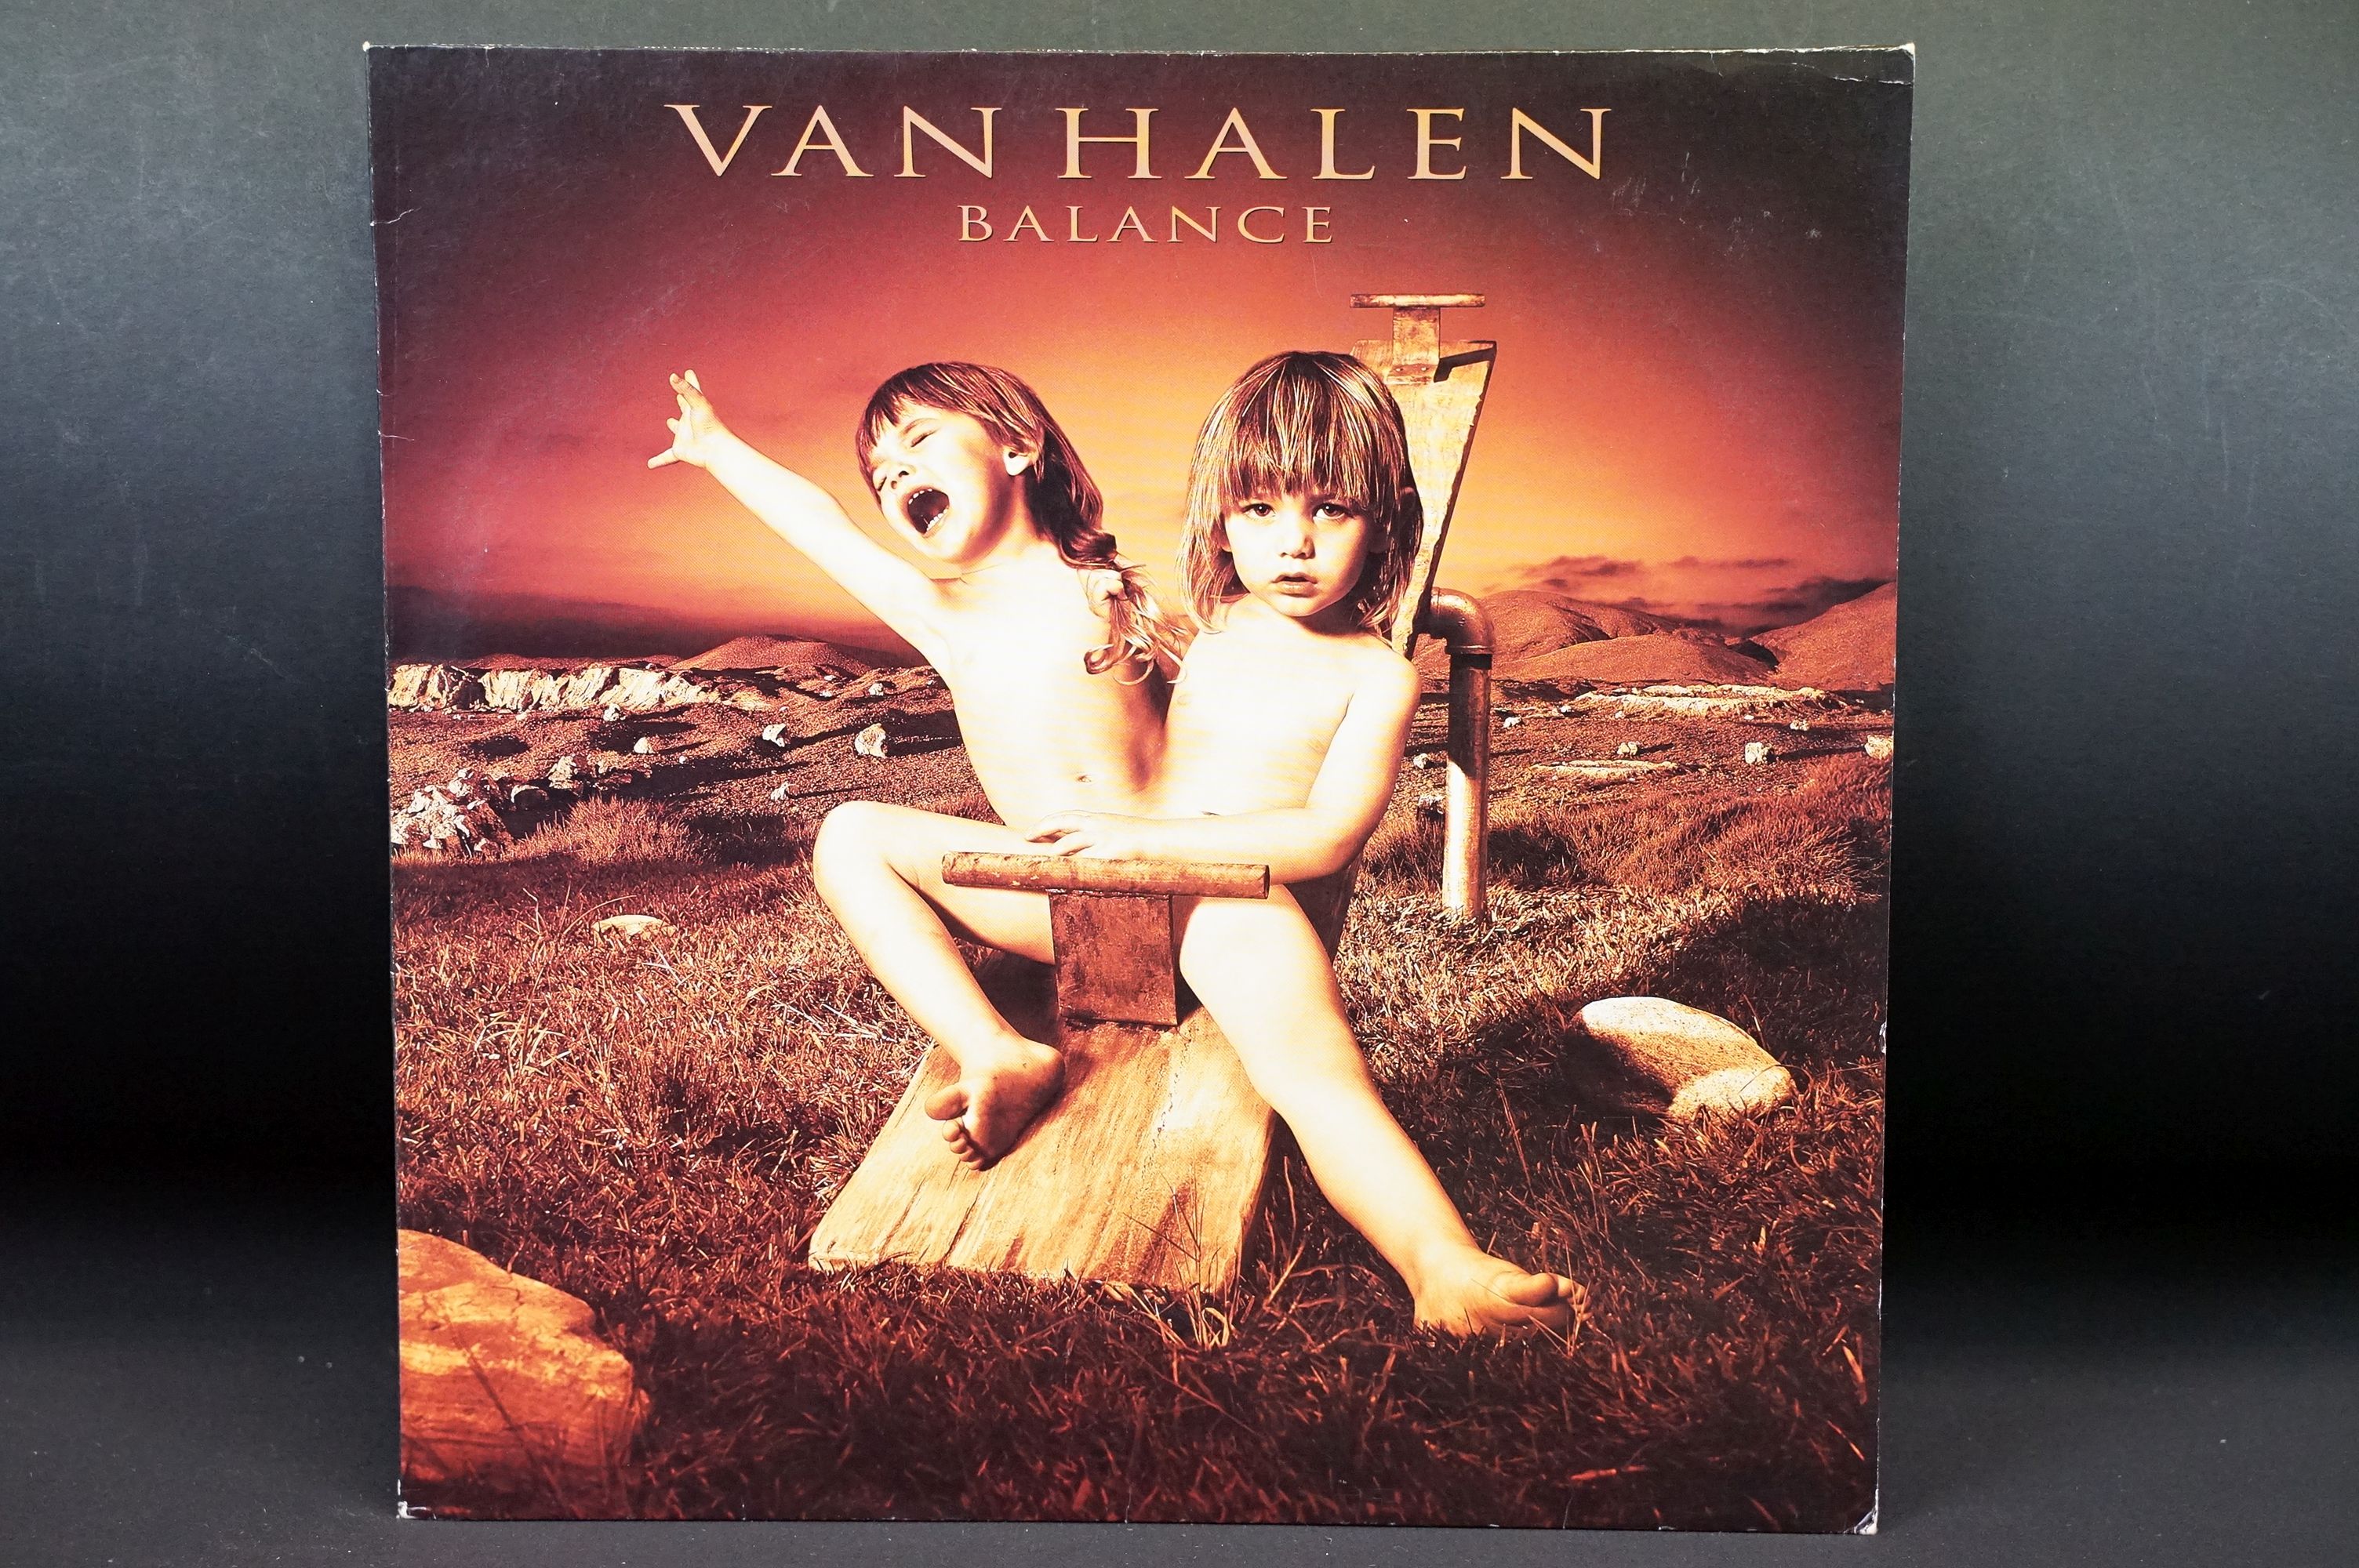 Vinyl - Van Halen – Balance. Original UK / EU 1995 1st pressing on Warner Bros. Records 9362-45863-1